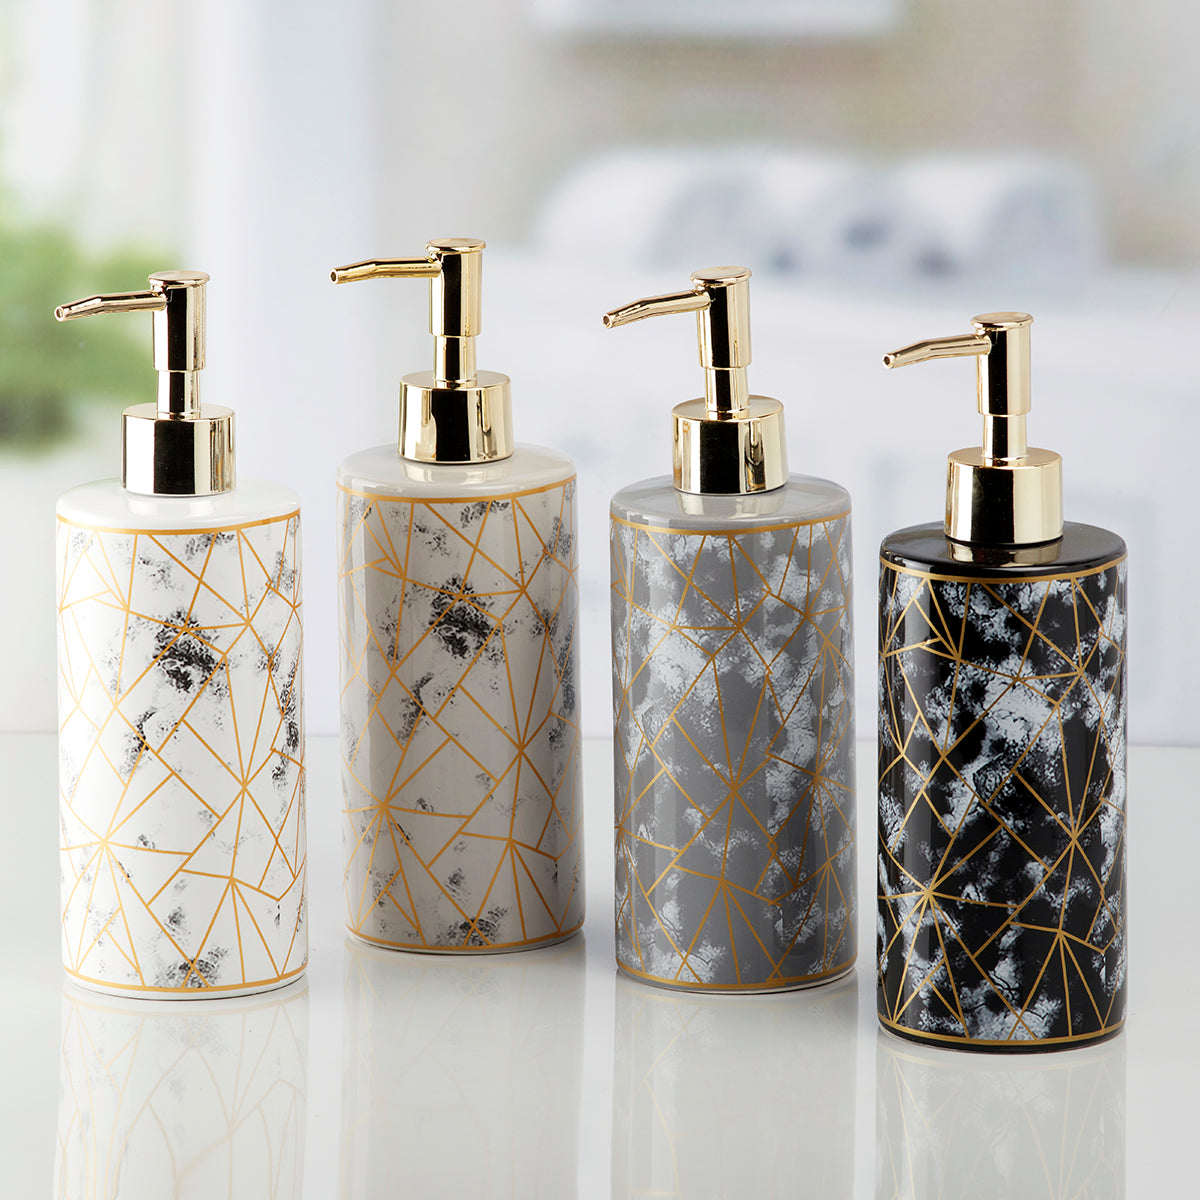 Ceramic Soap Dispenser Pump for Bathroom for Bath Gel, Lotion, Shampoo (10210)